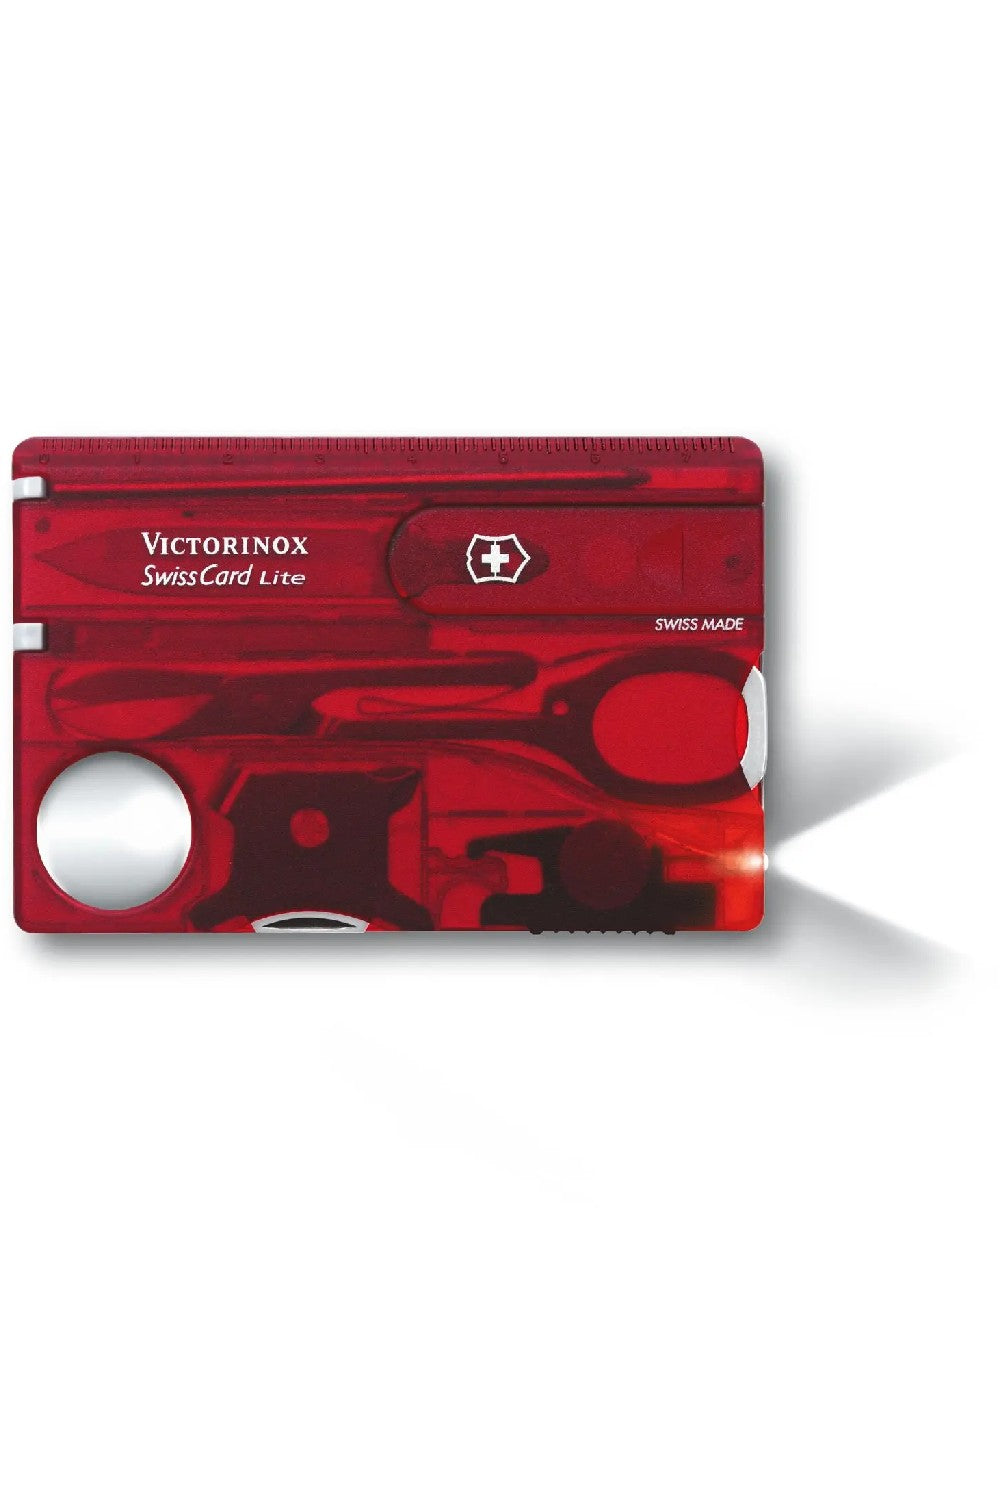 Victorinox Swiss Card Lite in Red Transparent 